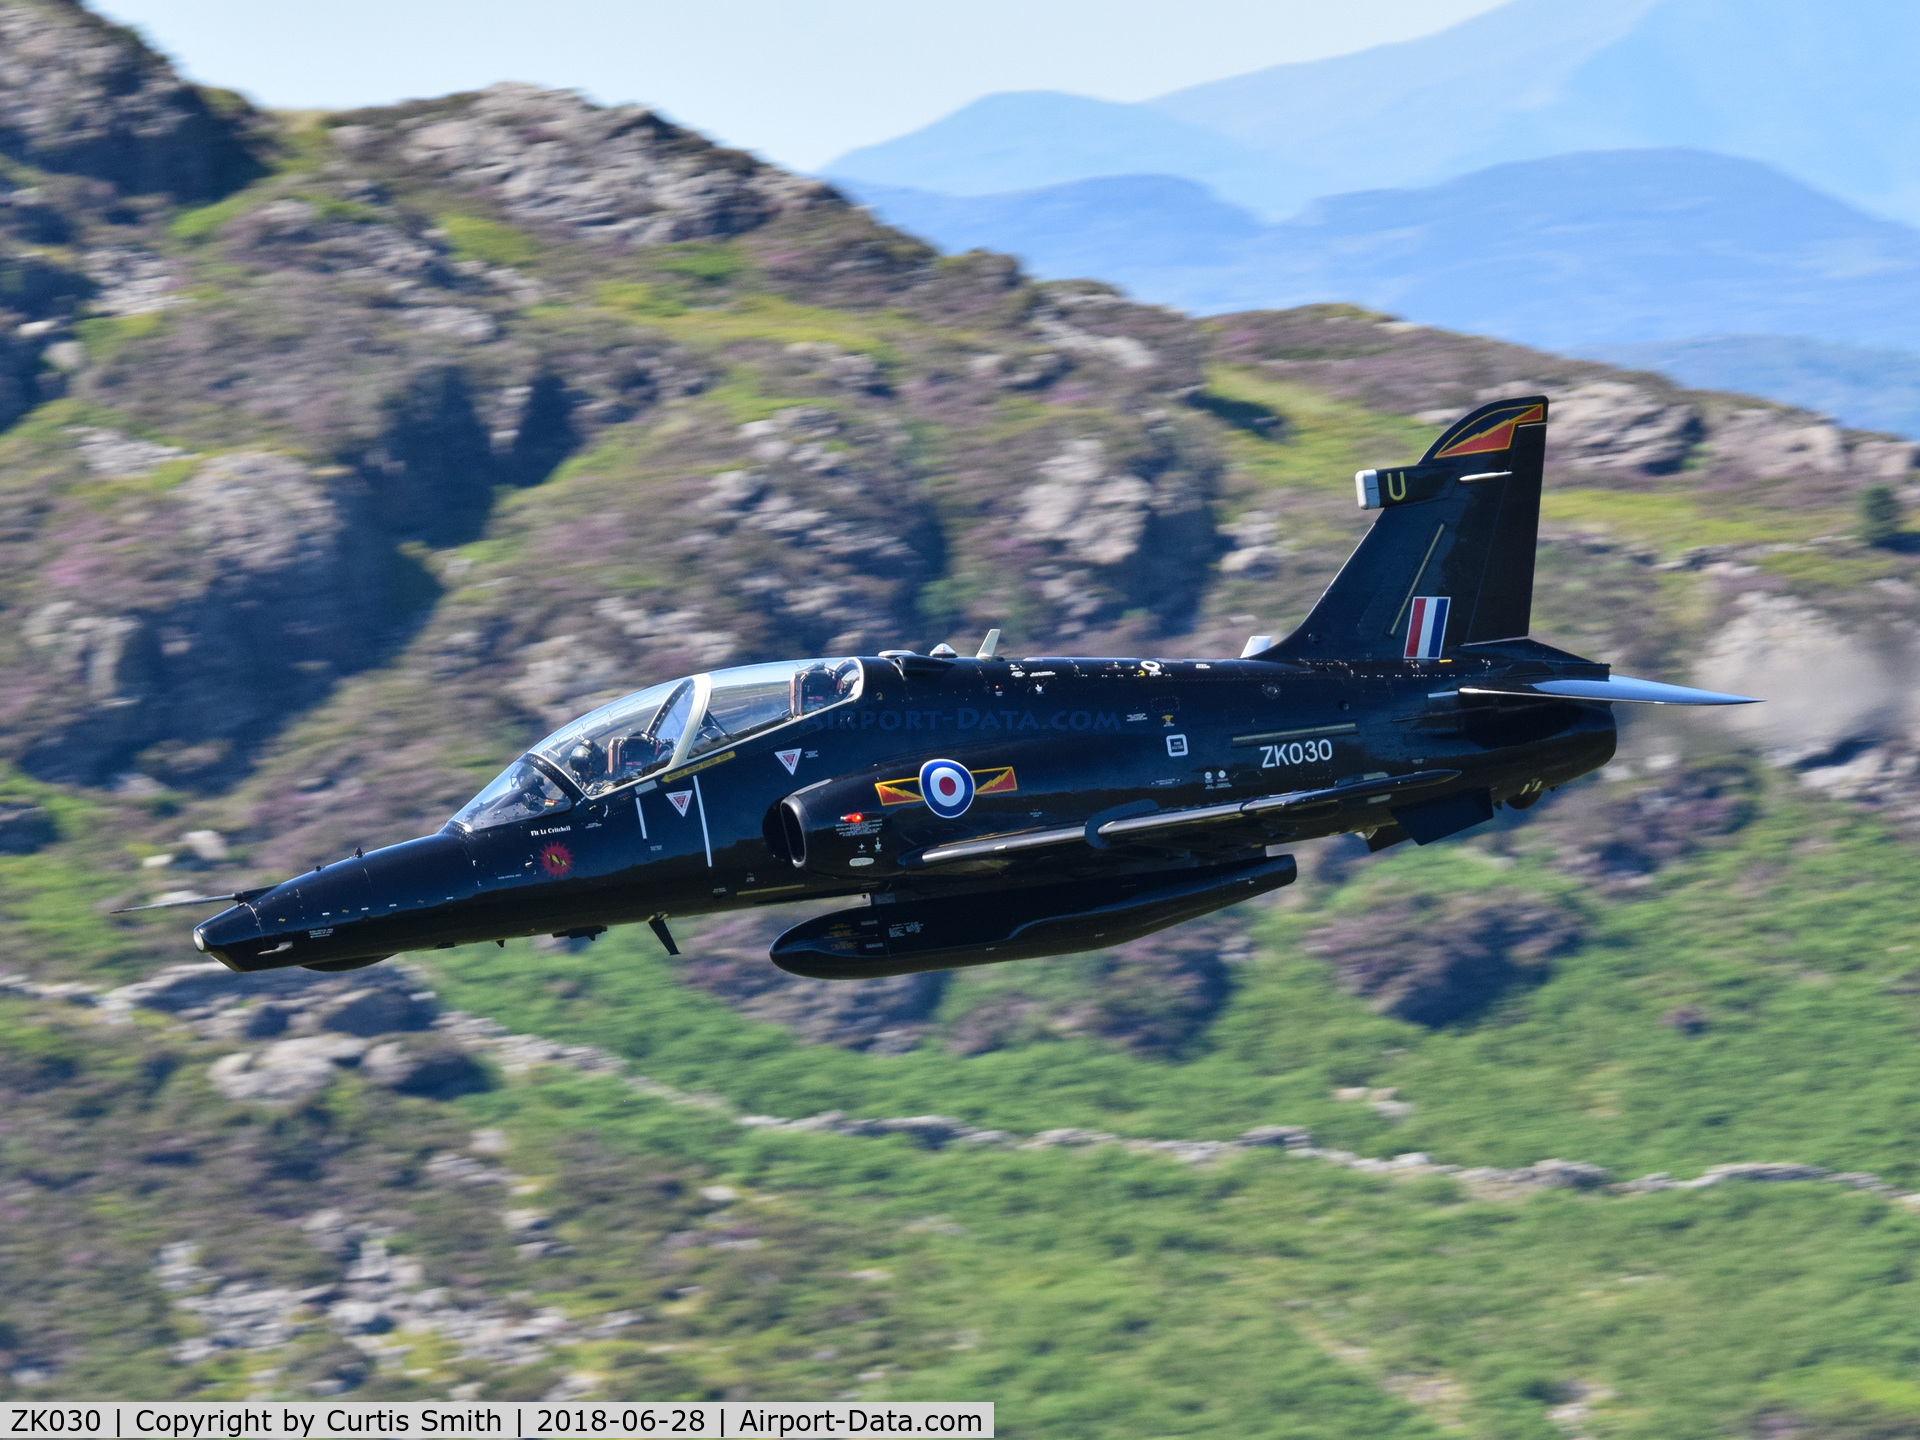 ZK030, 2010 British Aerospace Hawk T2 C/N RT021/1259, ZK030 flying through the Mach Loop.